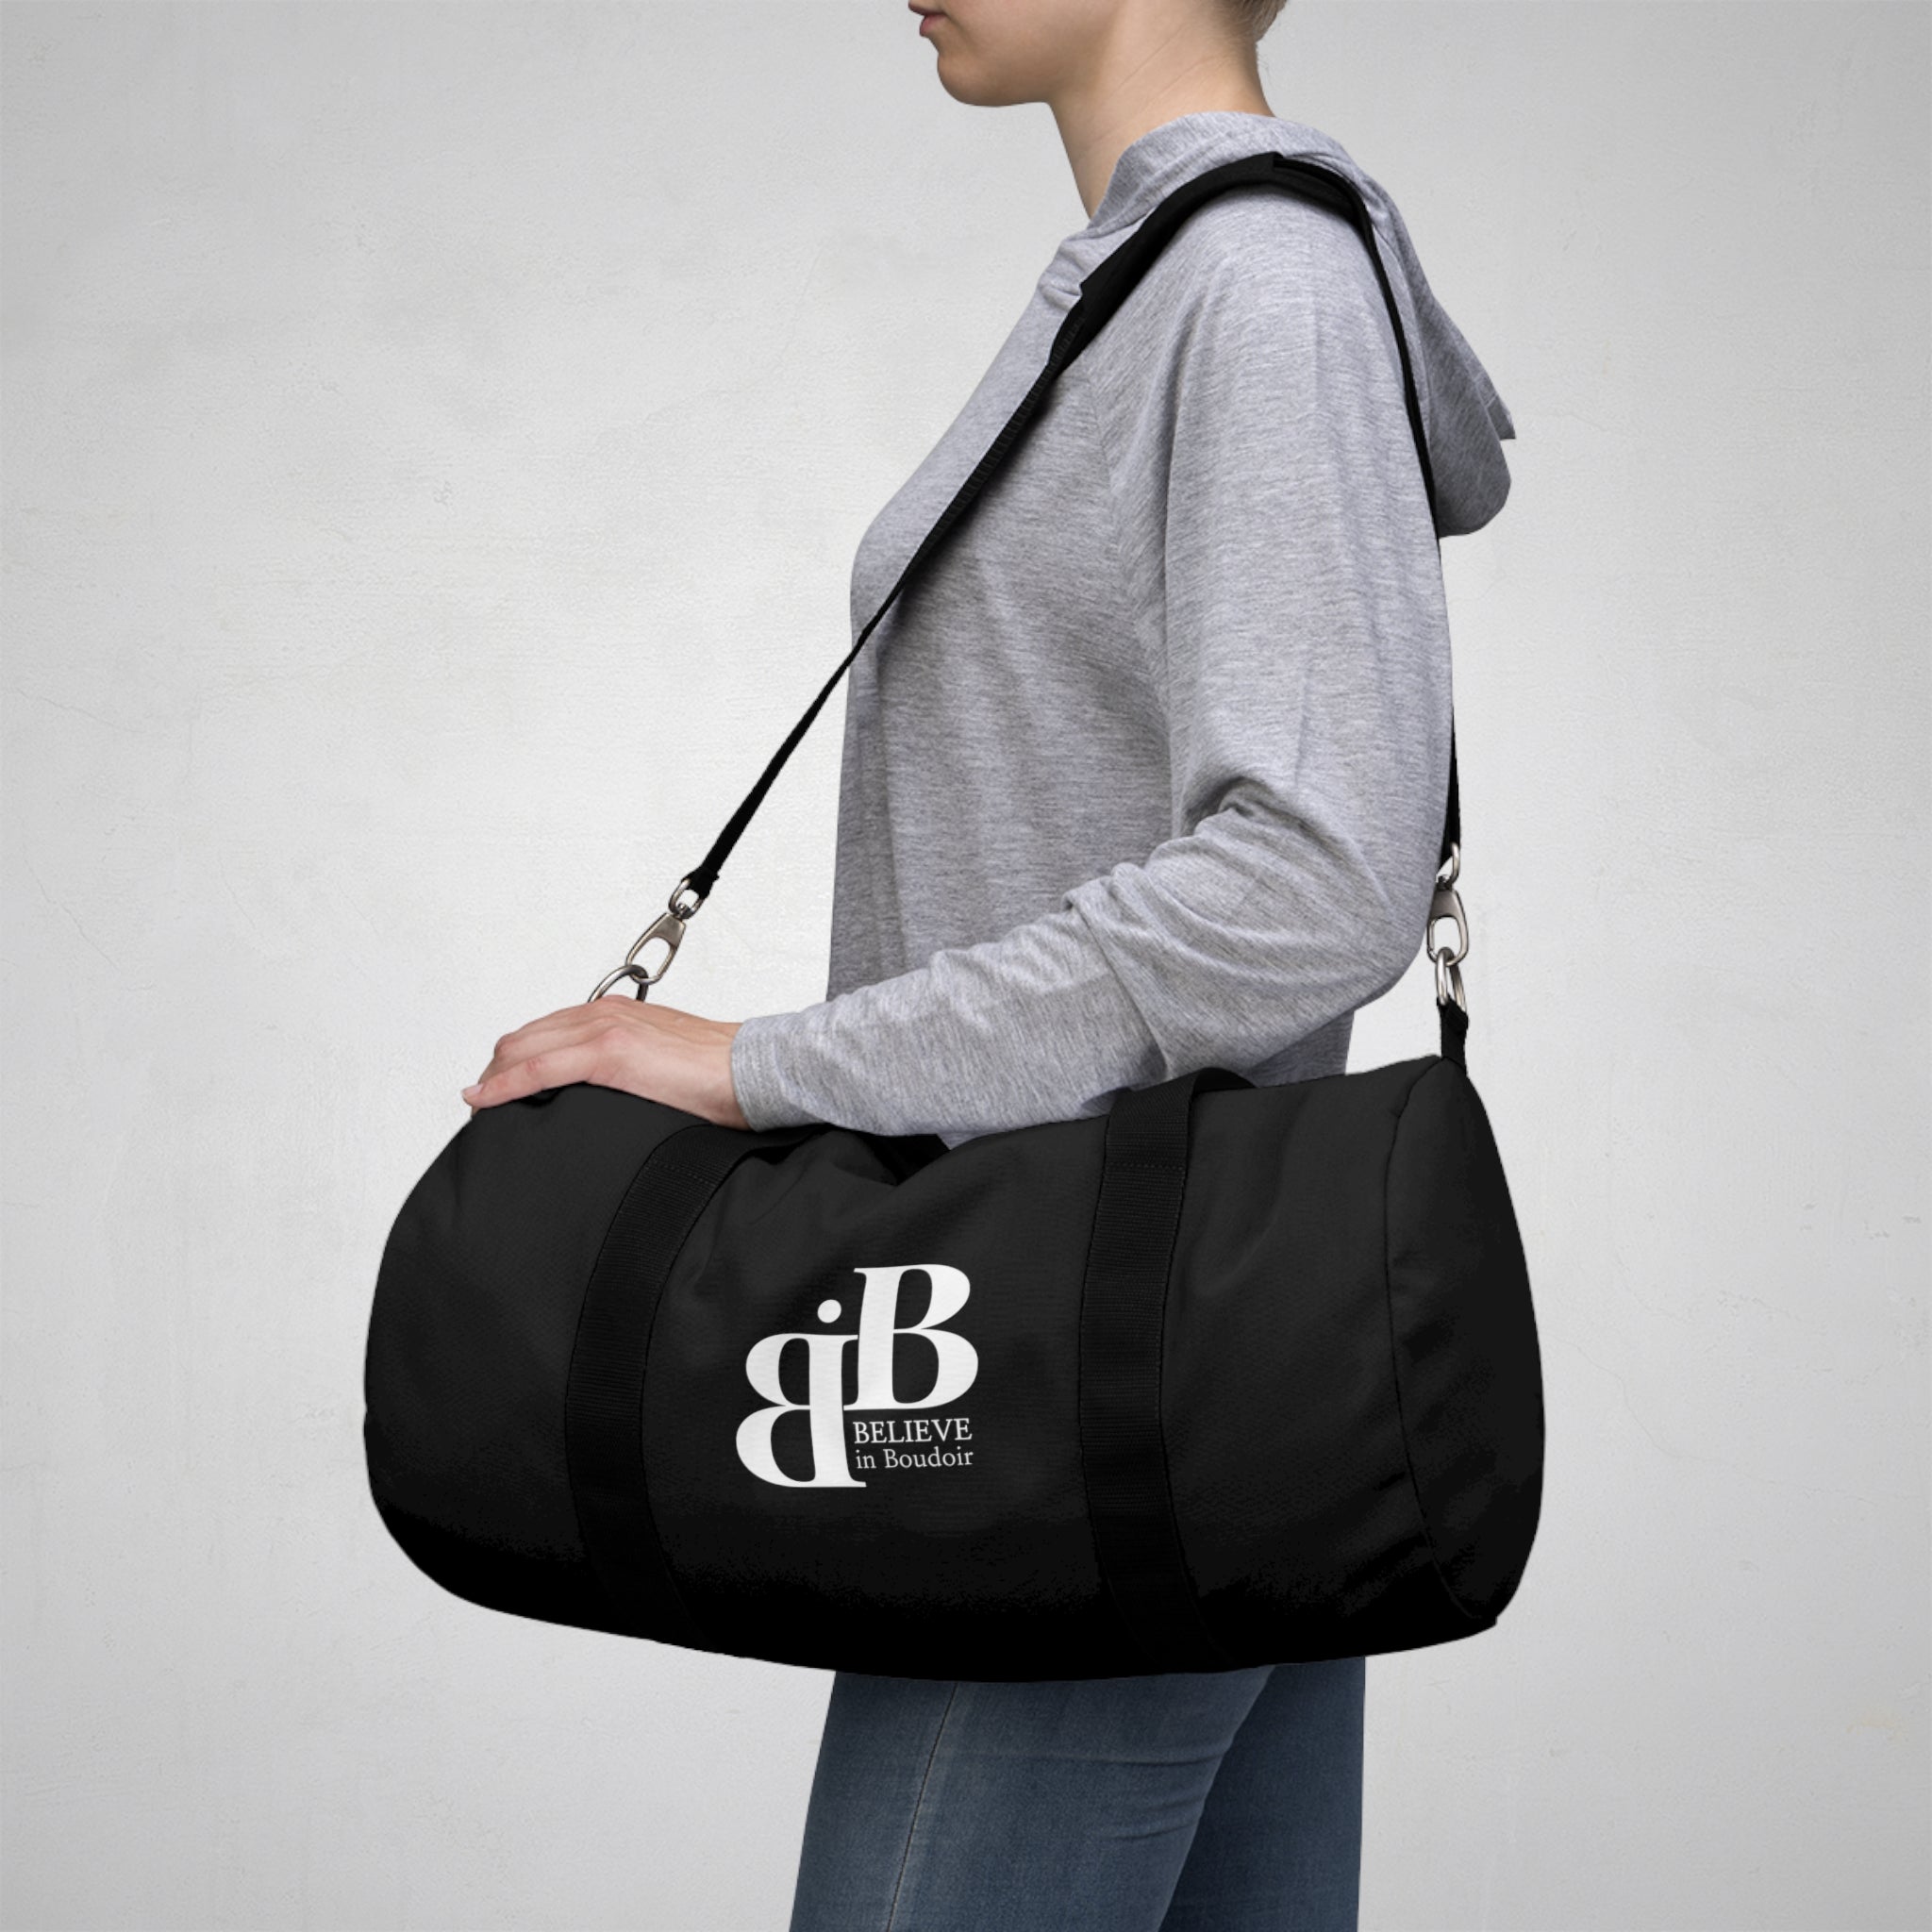 Believe in Boudoir Black Duffel Bag with White BIB Logo